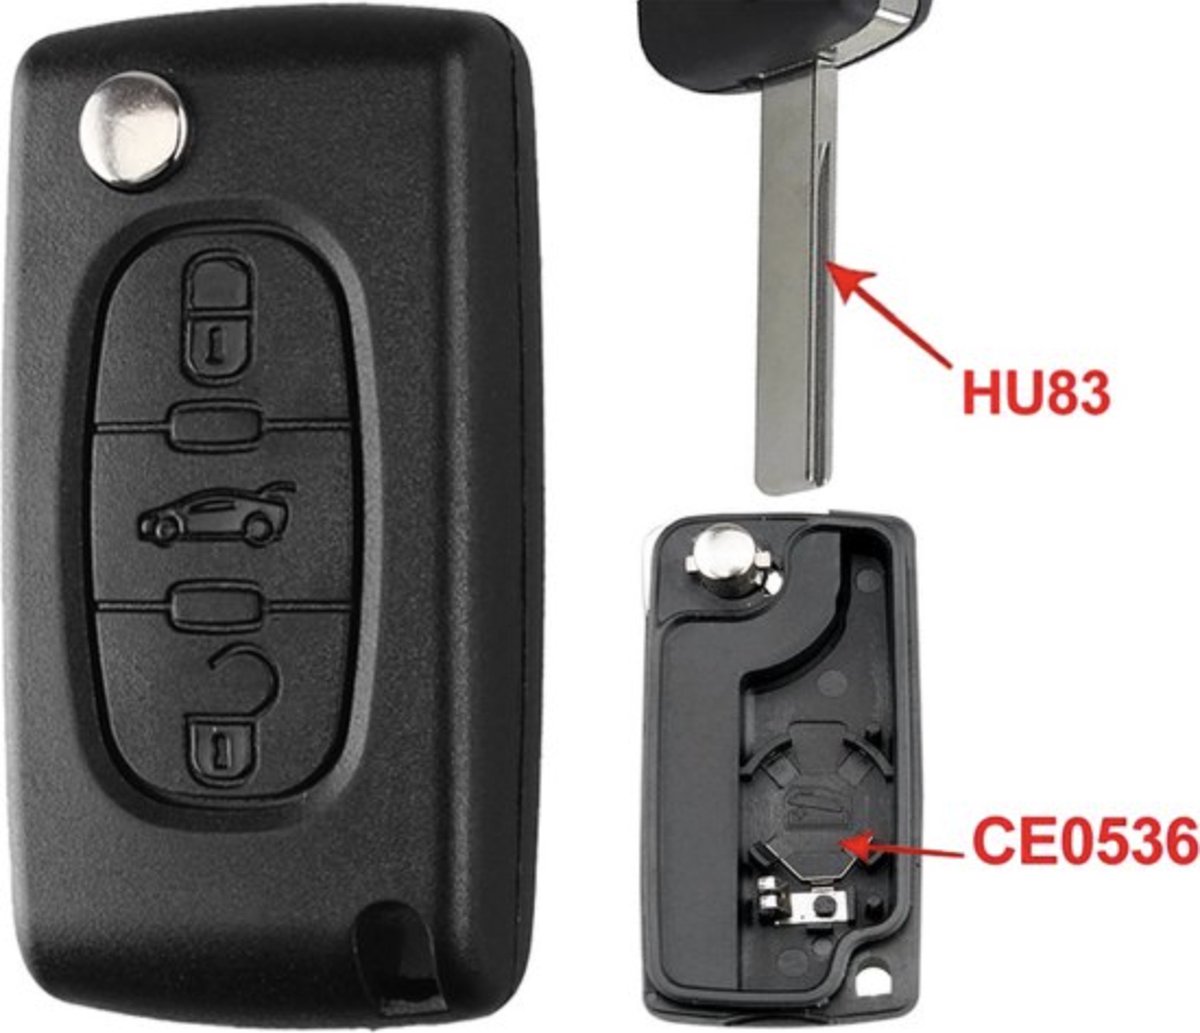 Peugeot 3 knops HU83 /Autosleutel/Autosleutelbehuizing / sleutelbehuizing auto / sleutel / Peugeot 3 knops HU83 CE0536